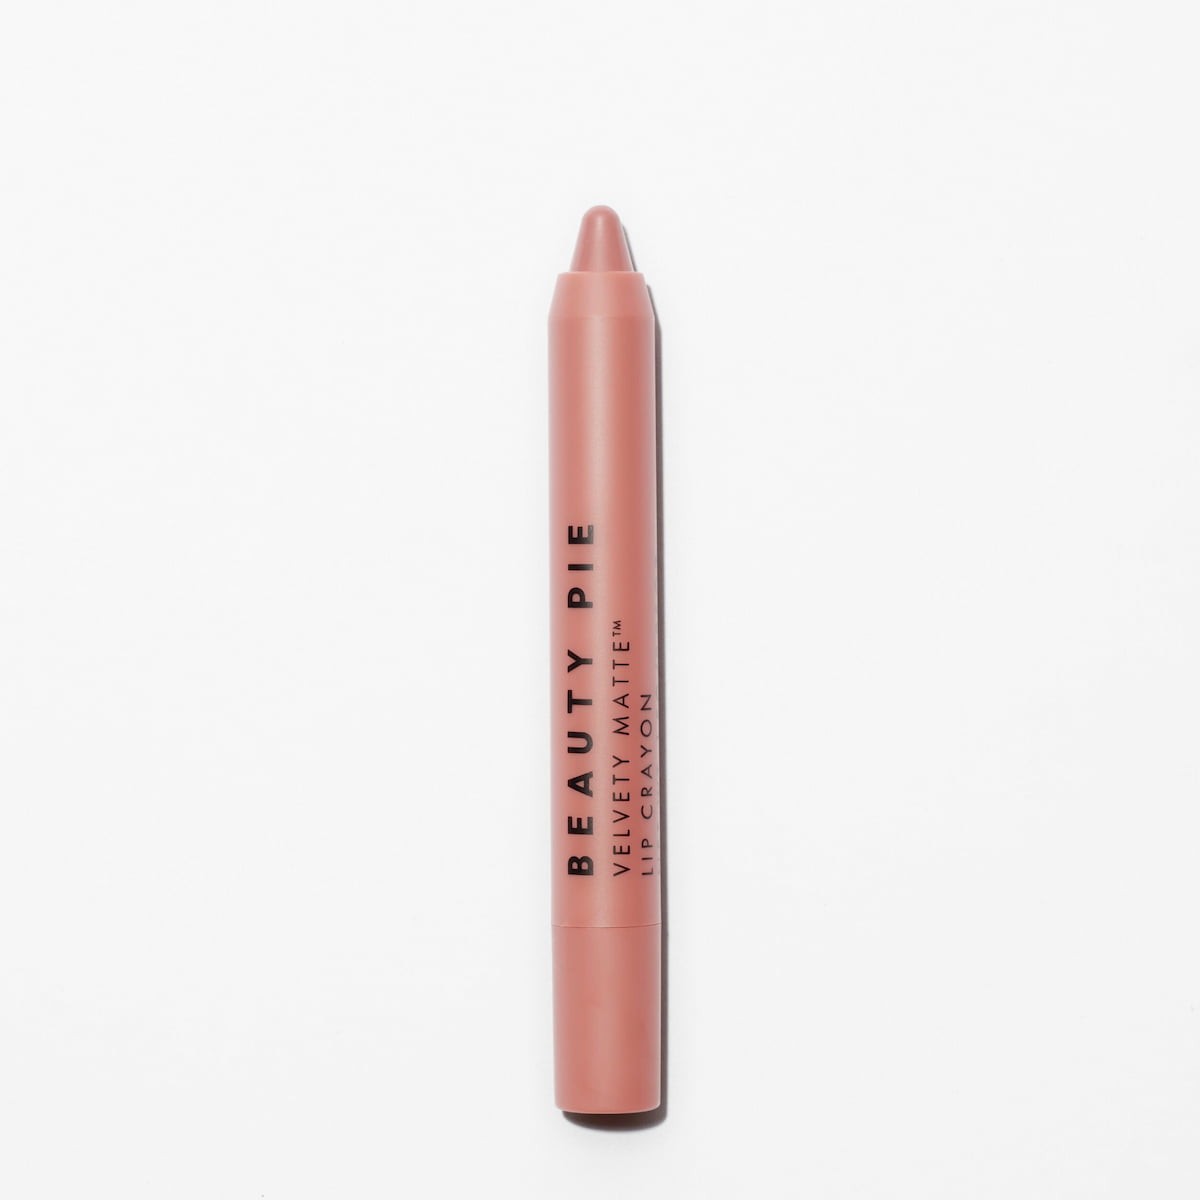 Beauty Pie + Matte Lip Crayon in Rummy Pink